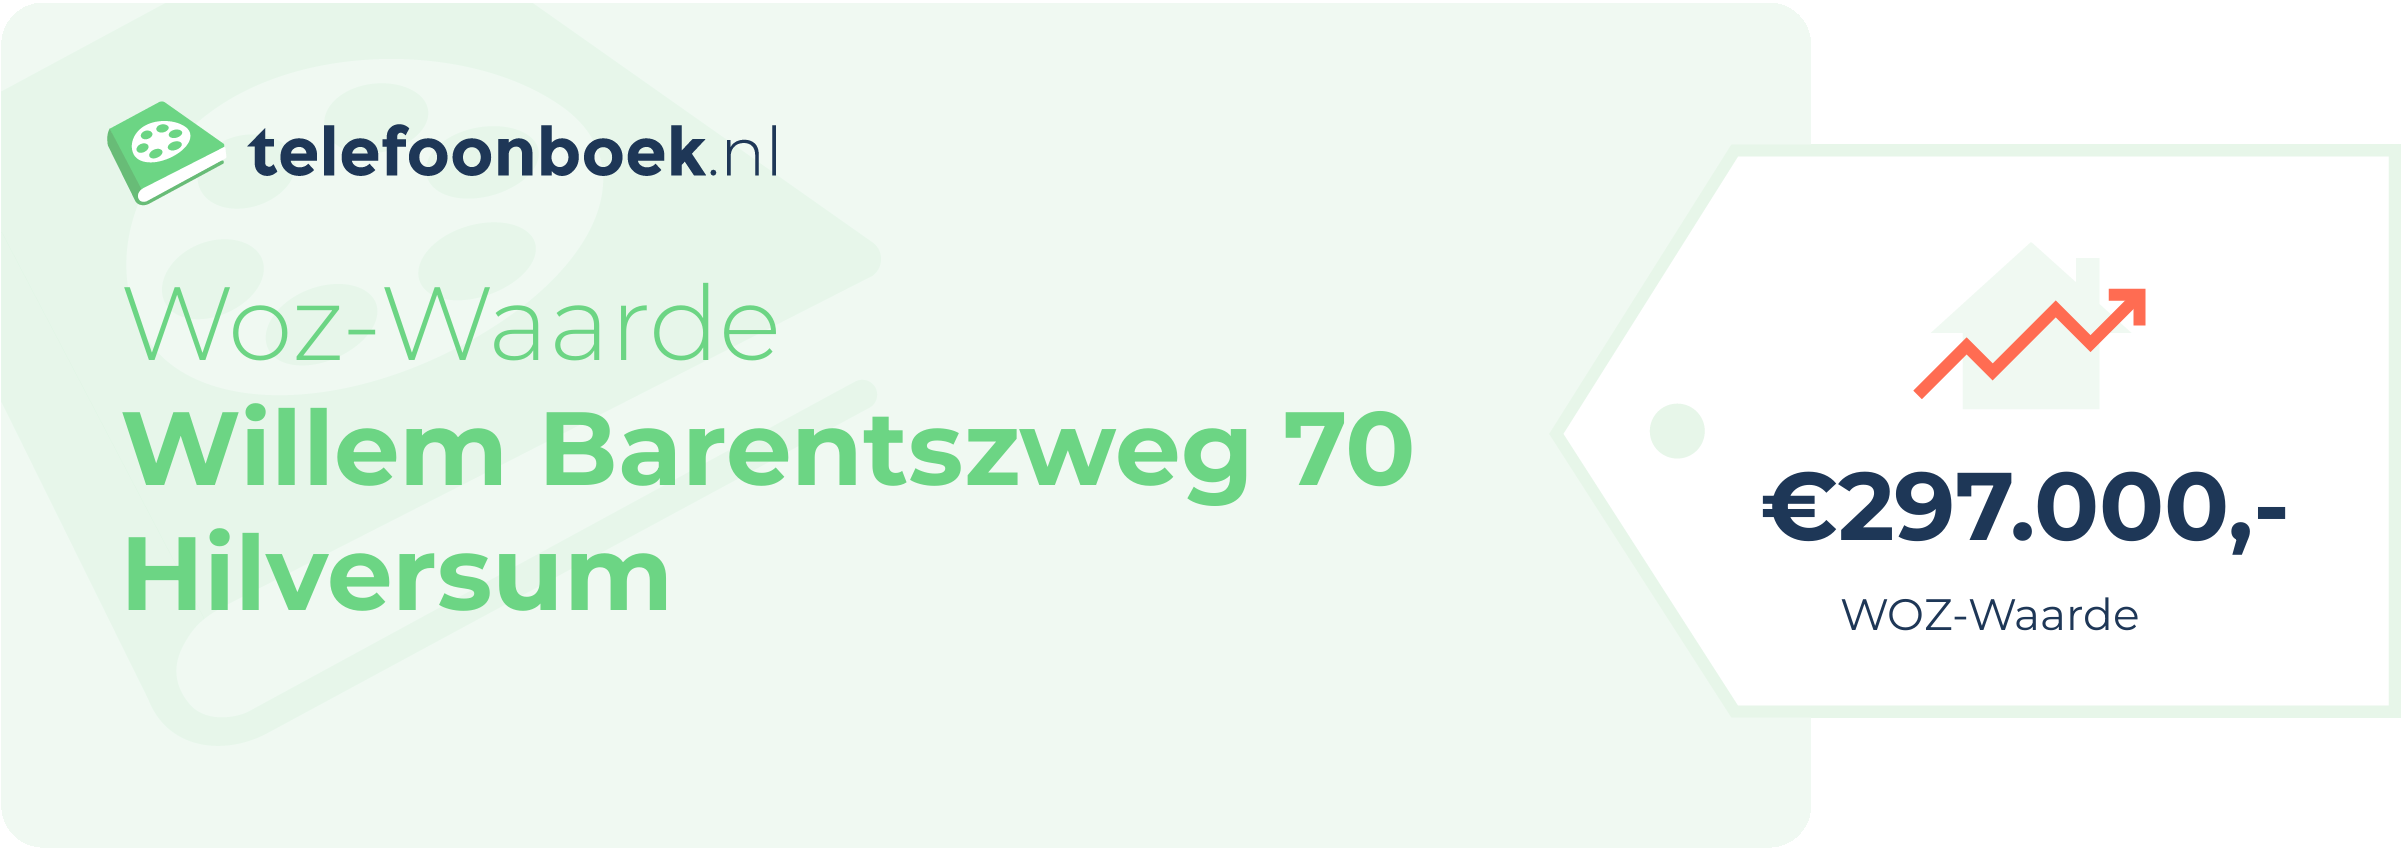 WOZ-waarde Willem Barentszweg 70 Hilversum